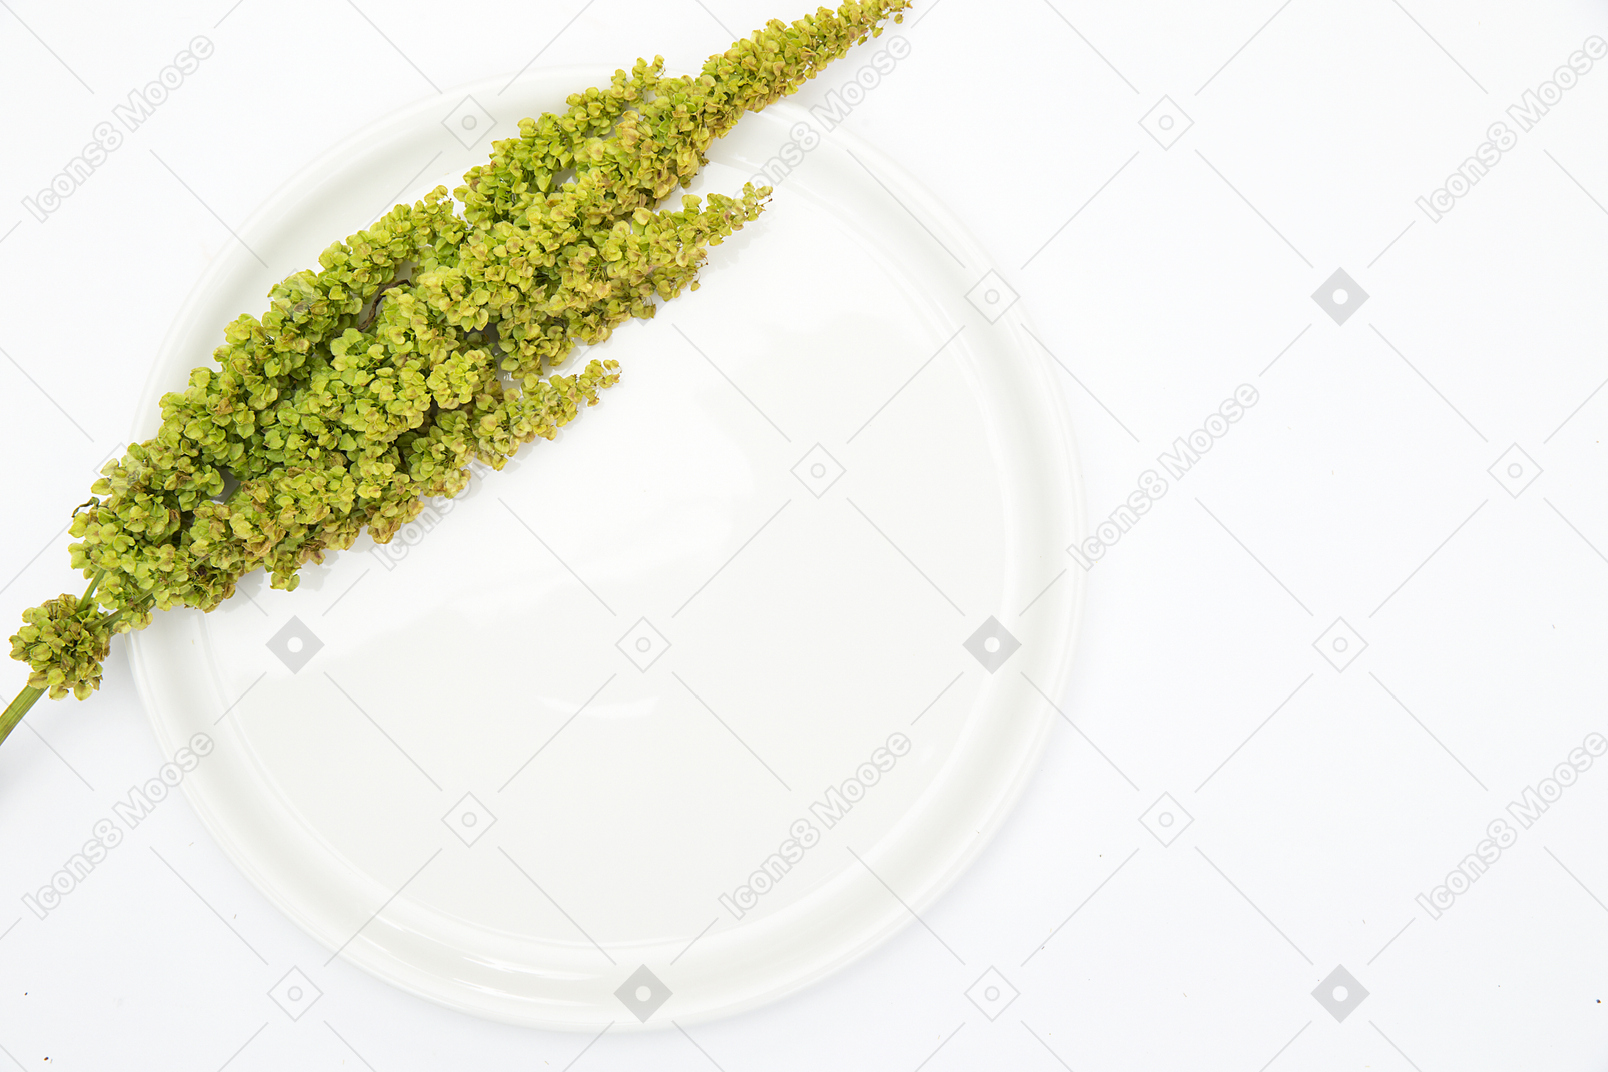 Plante verte sur plaque blanche